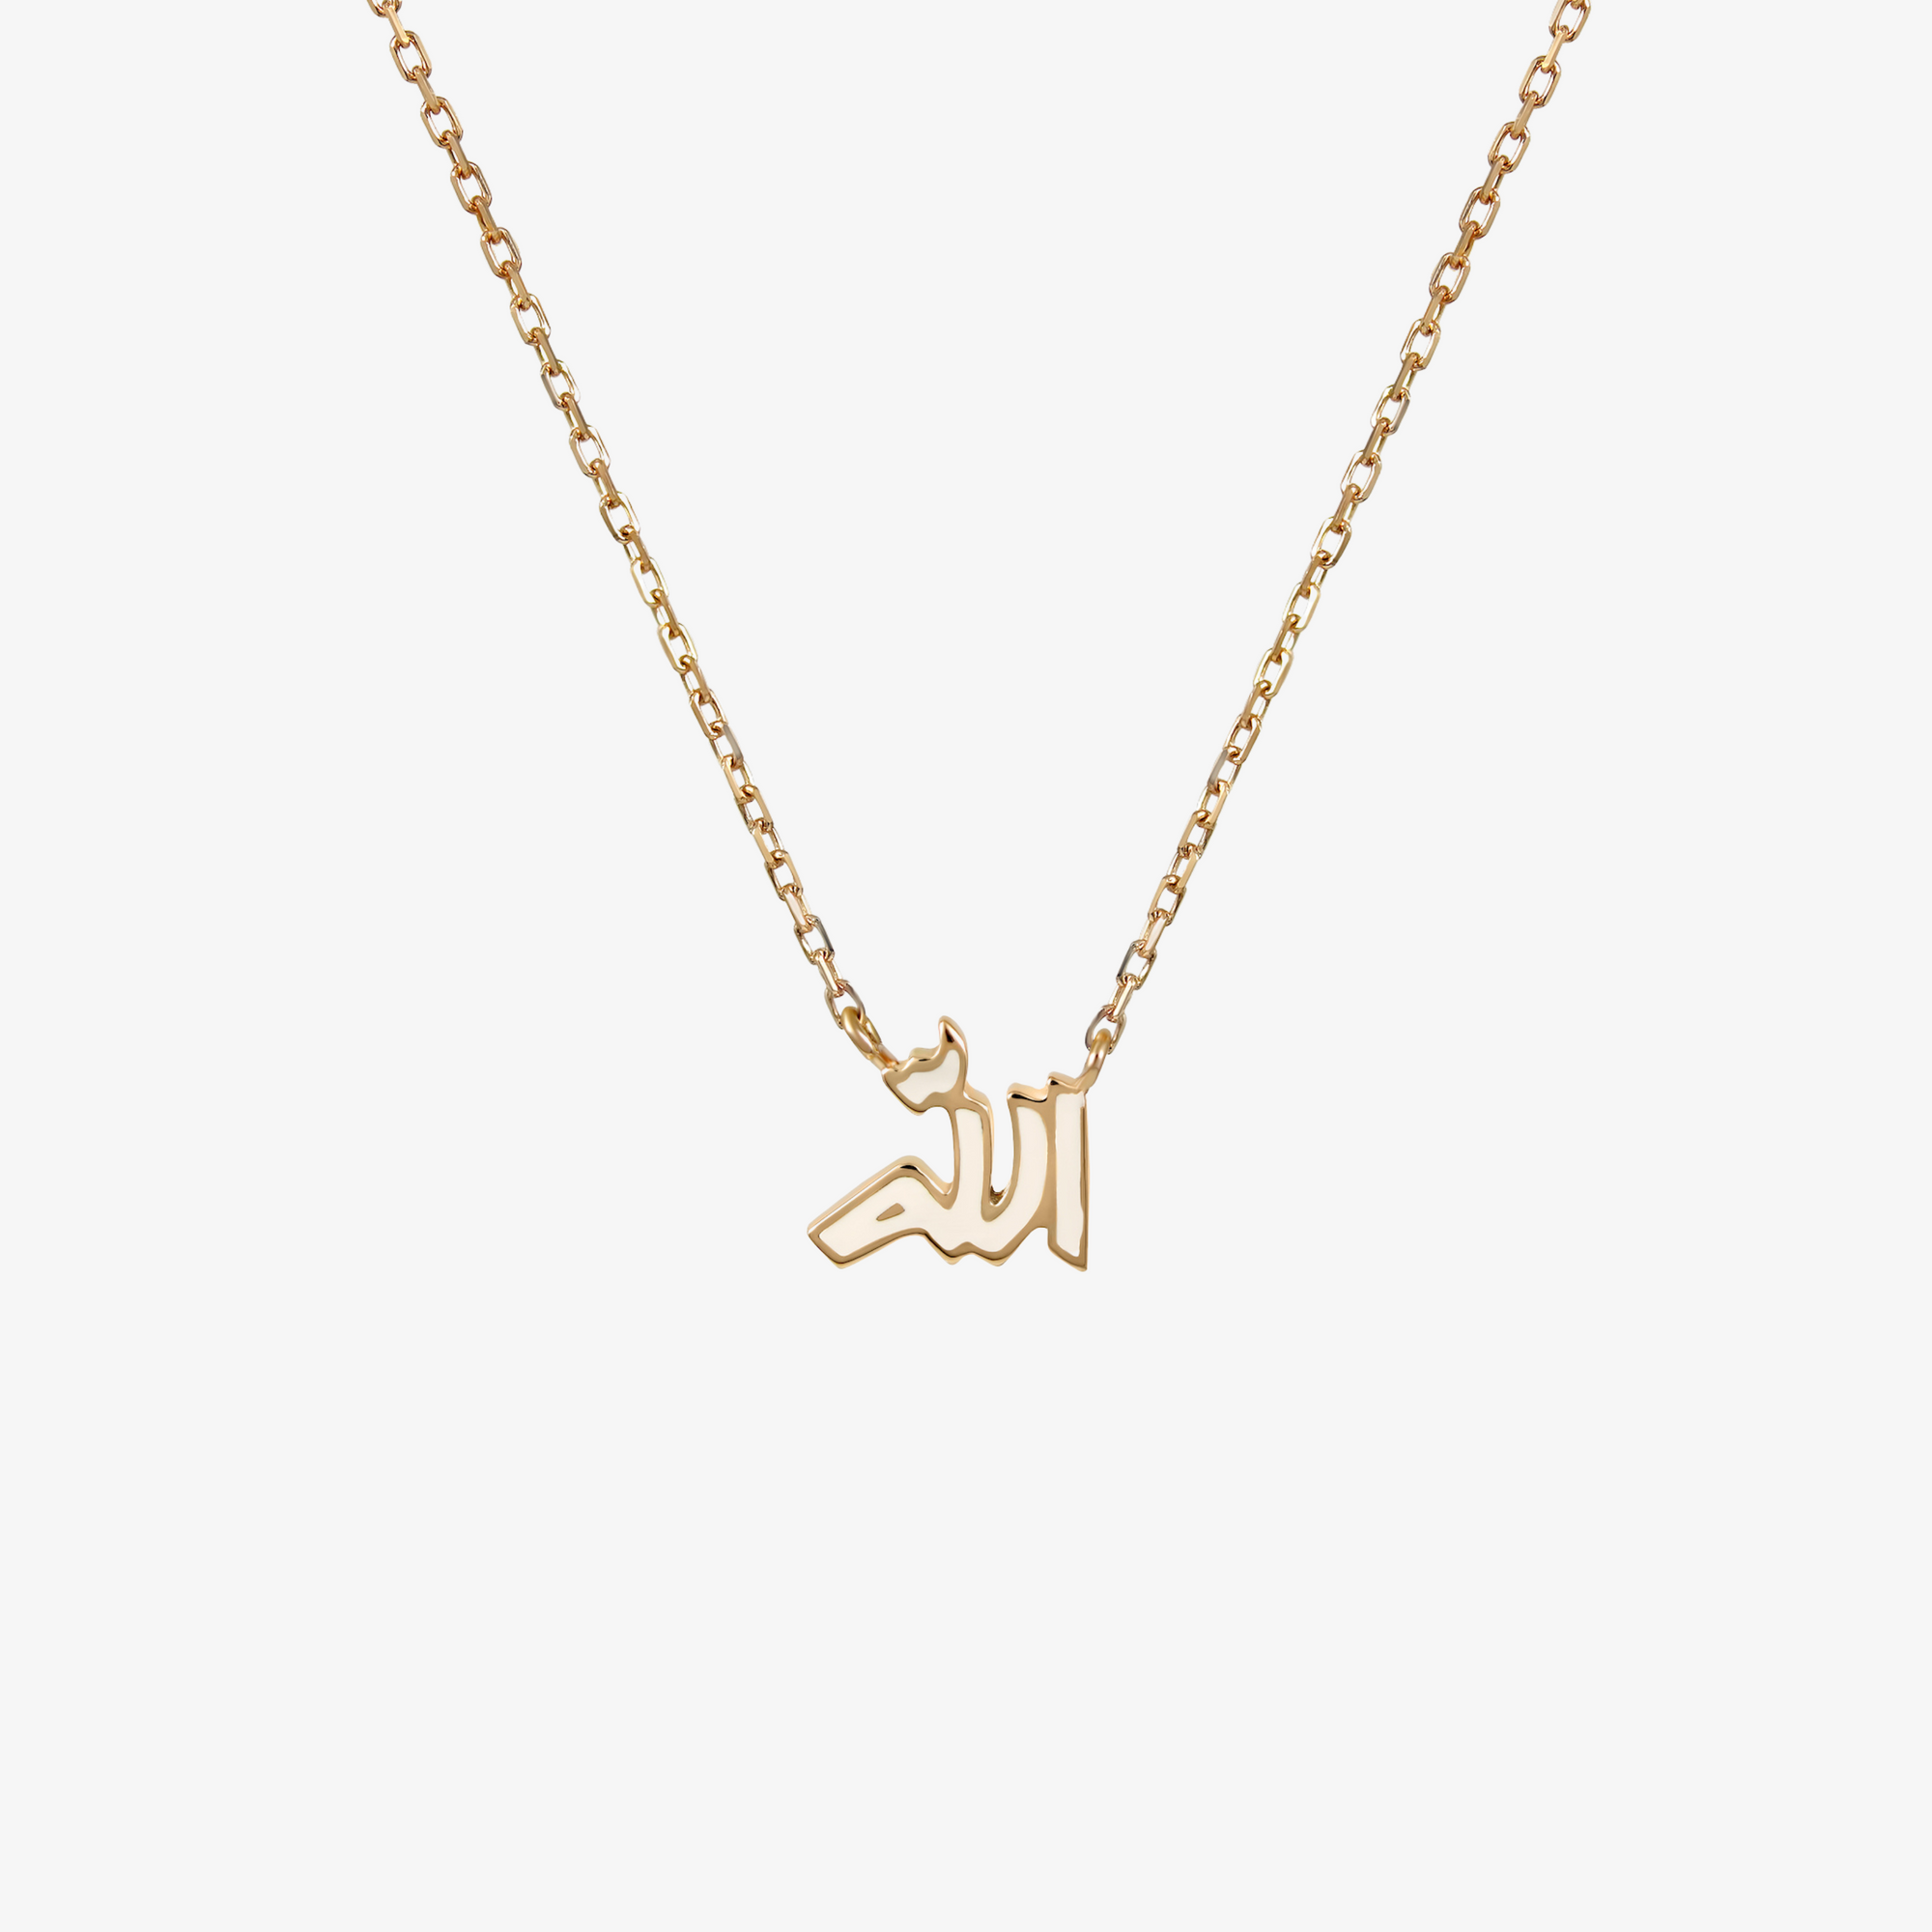 OULA - 18K Gold & Enamel "Allah" Necklace